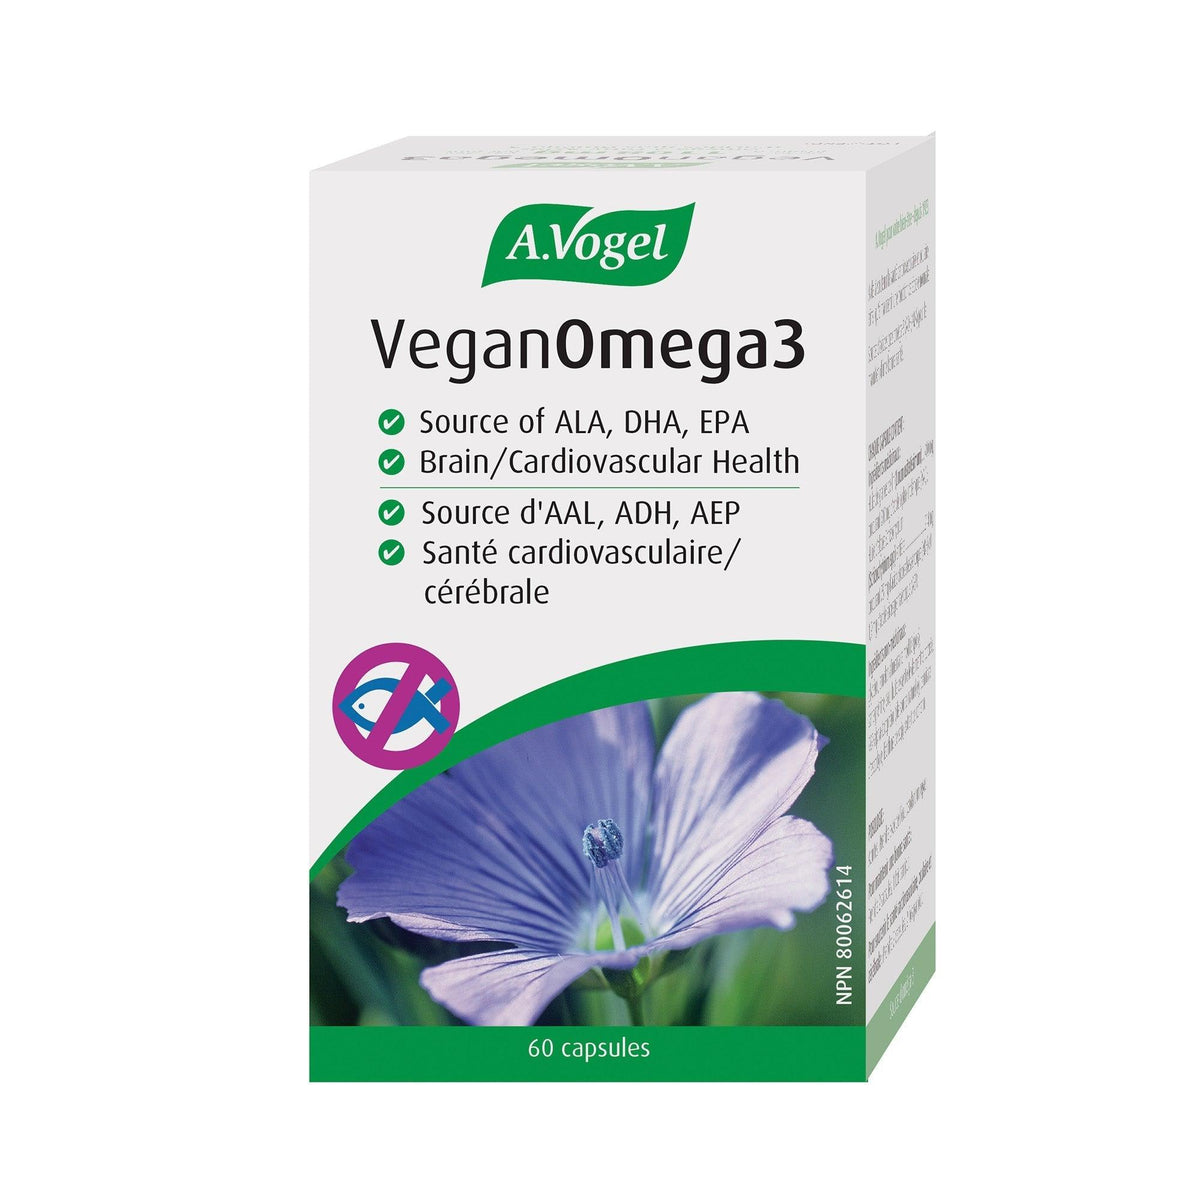 A. Vogel VeganOmega3, 60 Capsules Supplements - EFAs at Village Vitamin Store